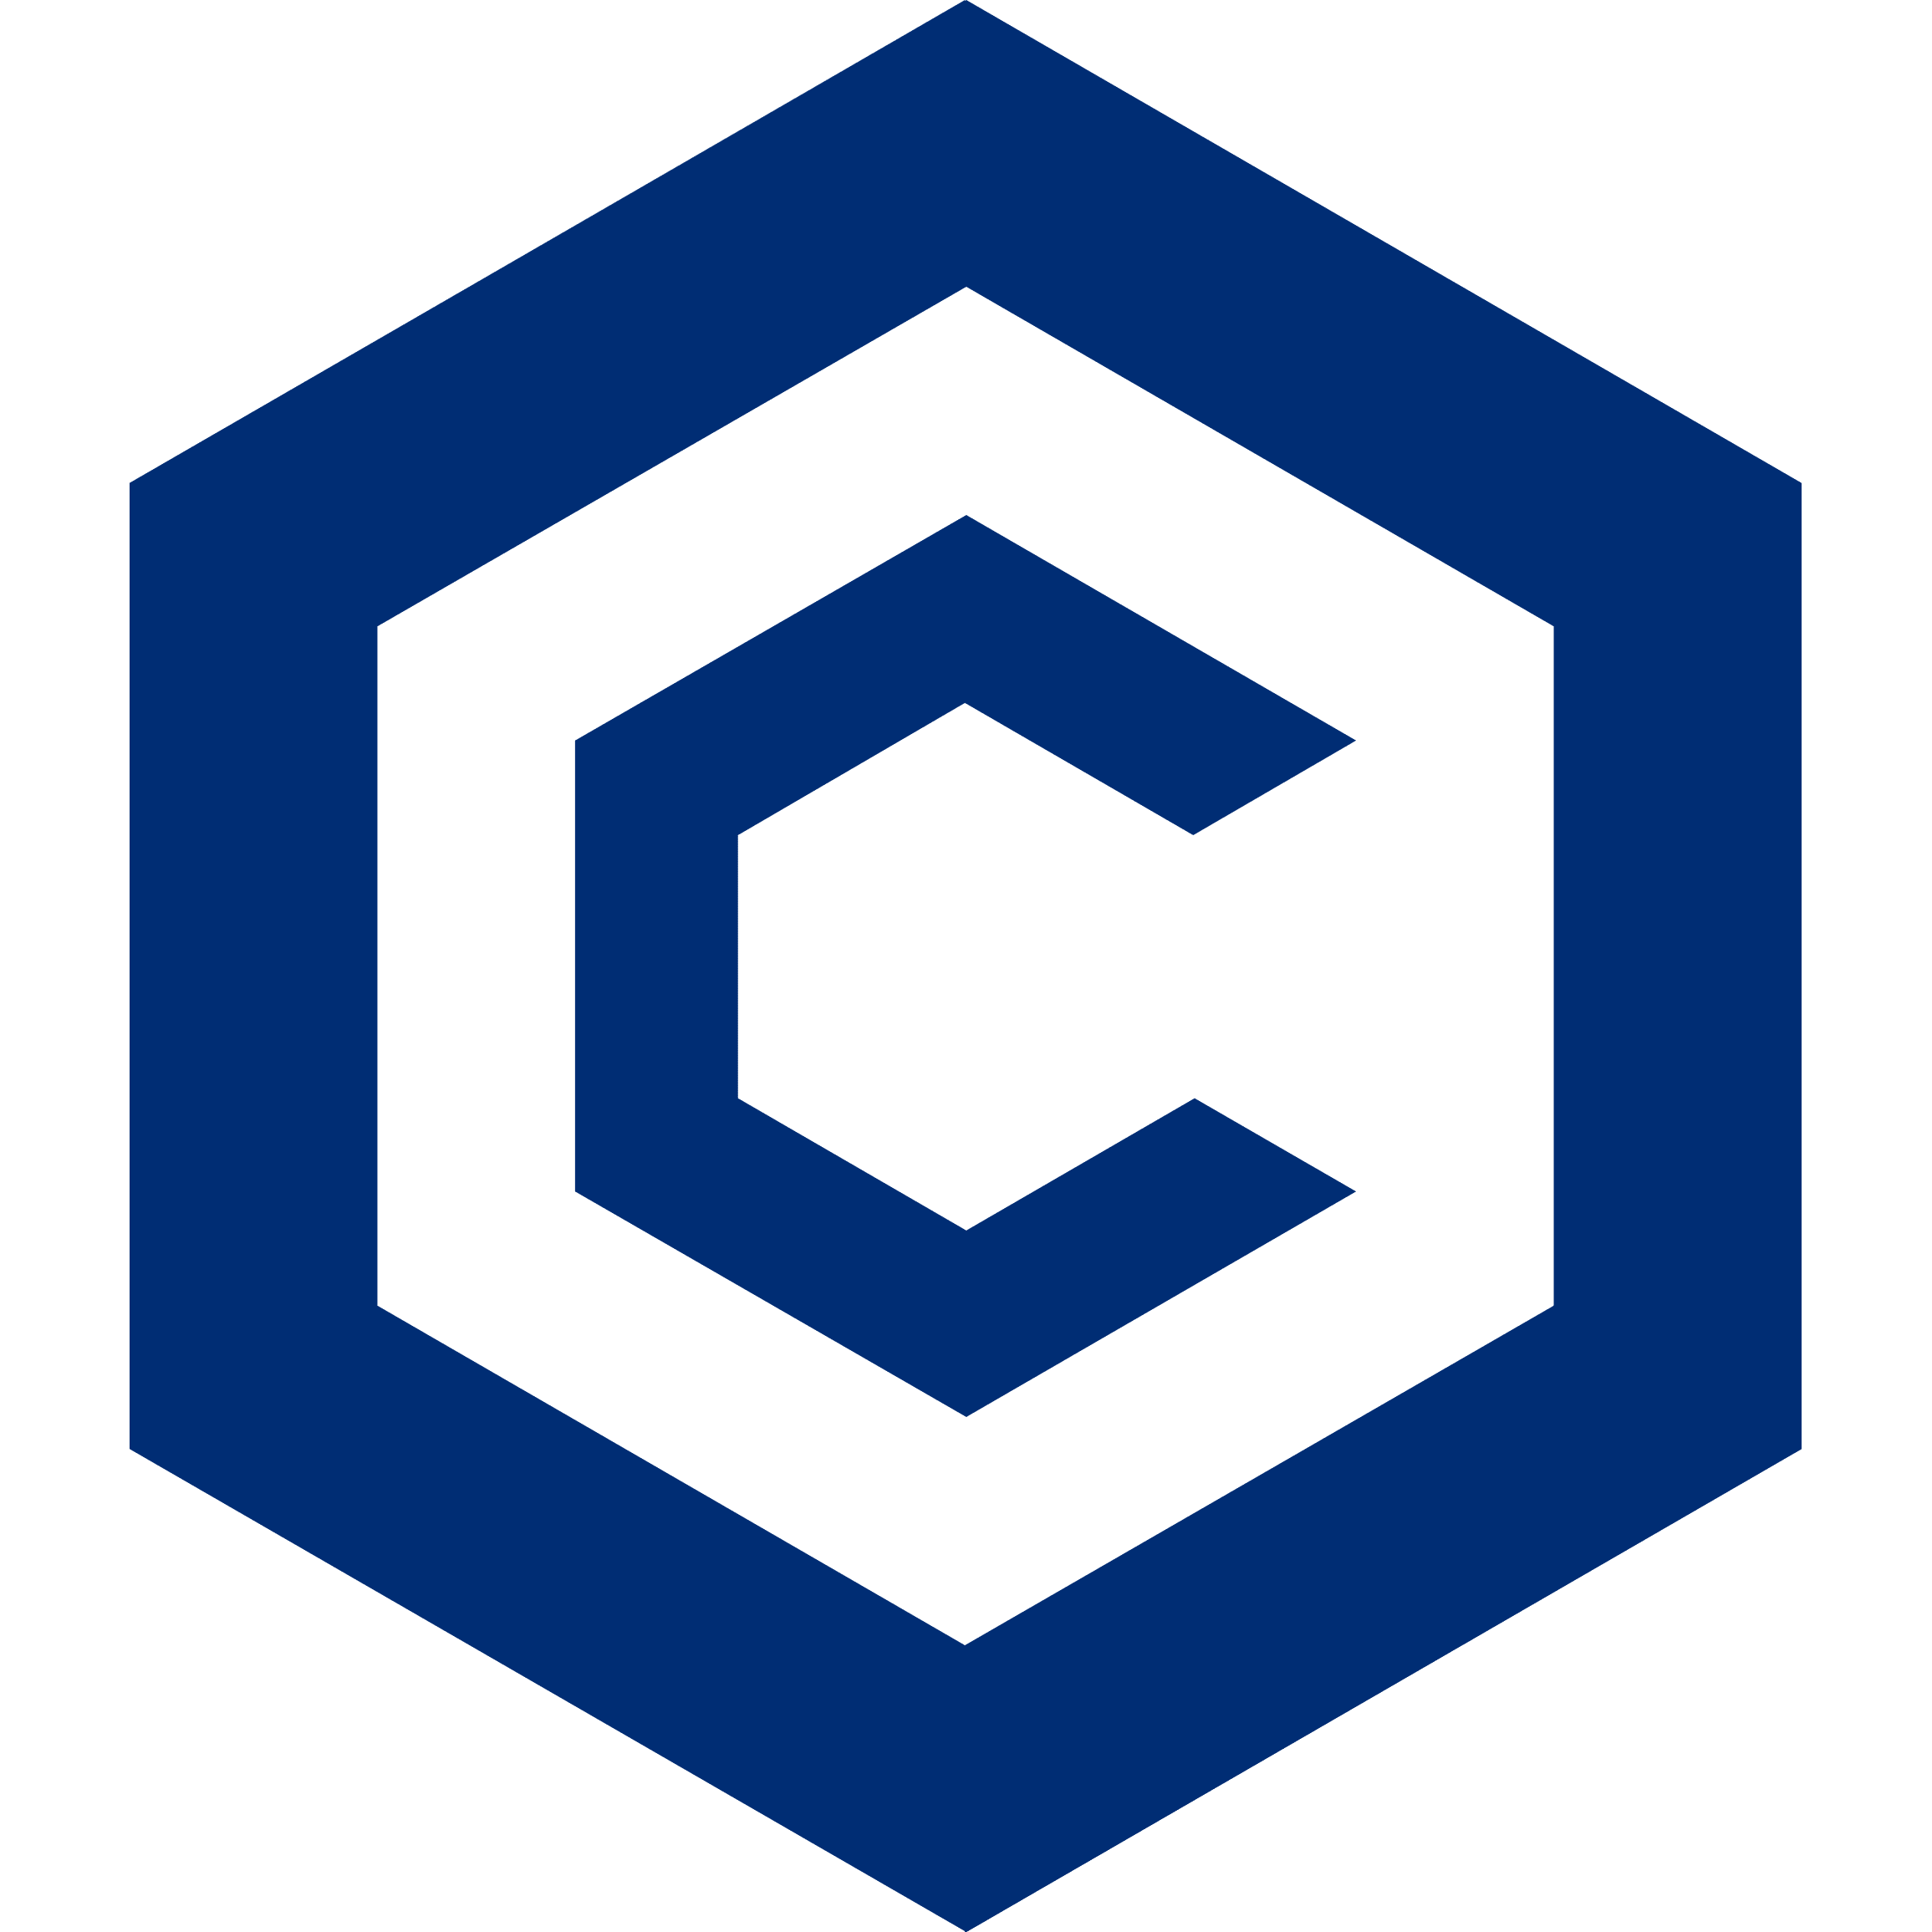 Cronos logo in png format